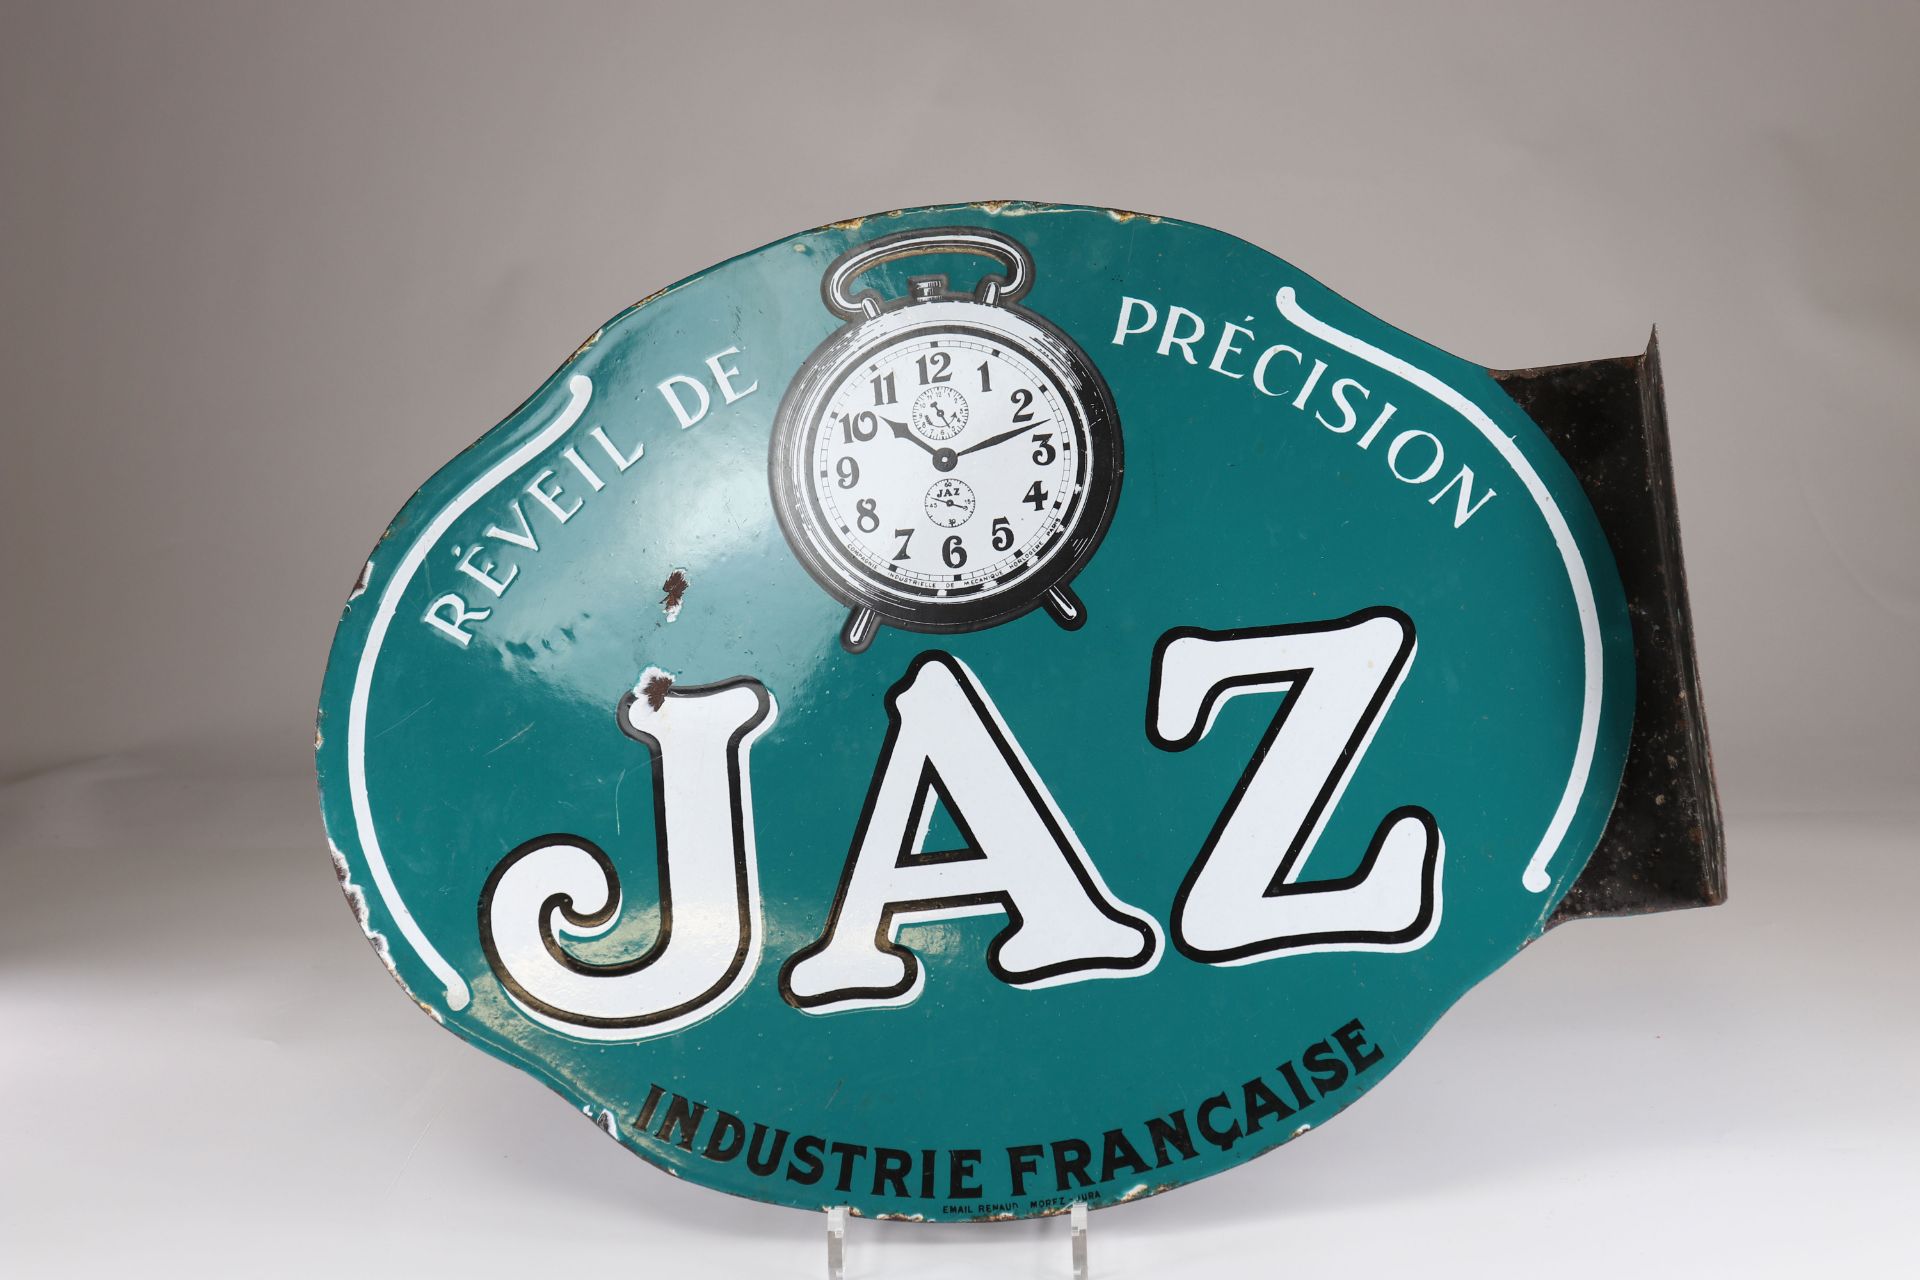 Double-sided enamel sign Jaz "precision alarm clock" - Image 2 of 2